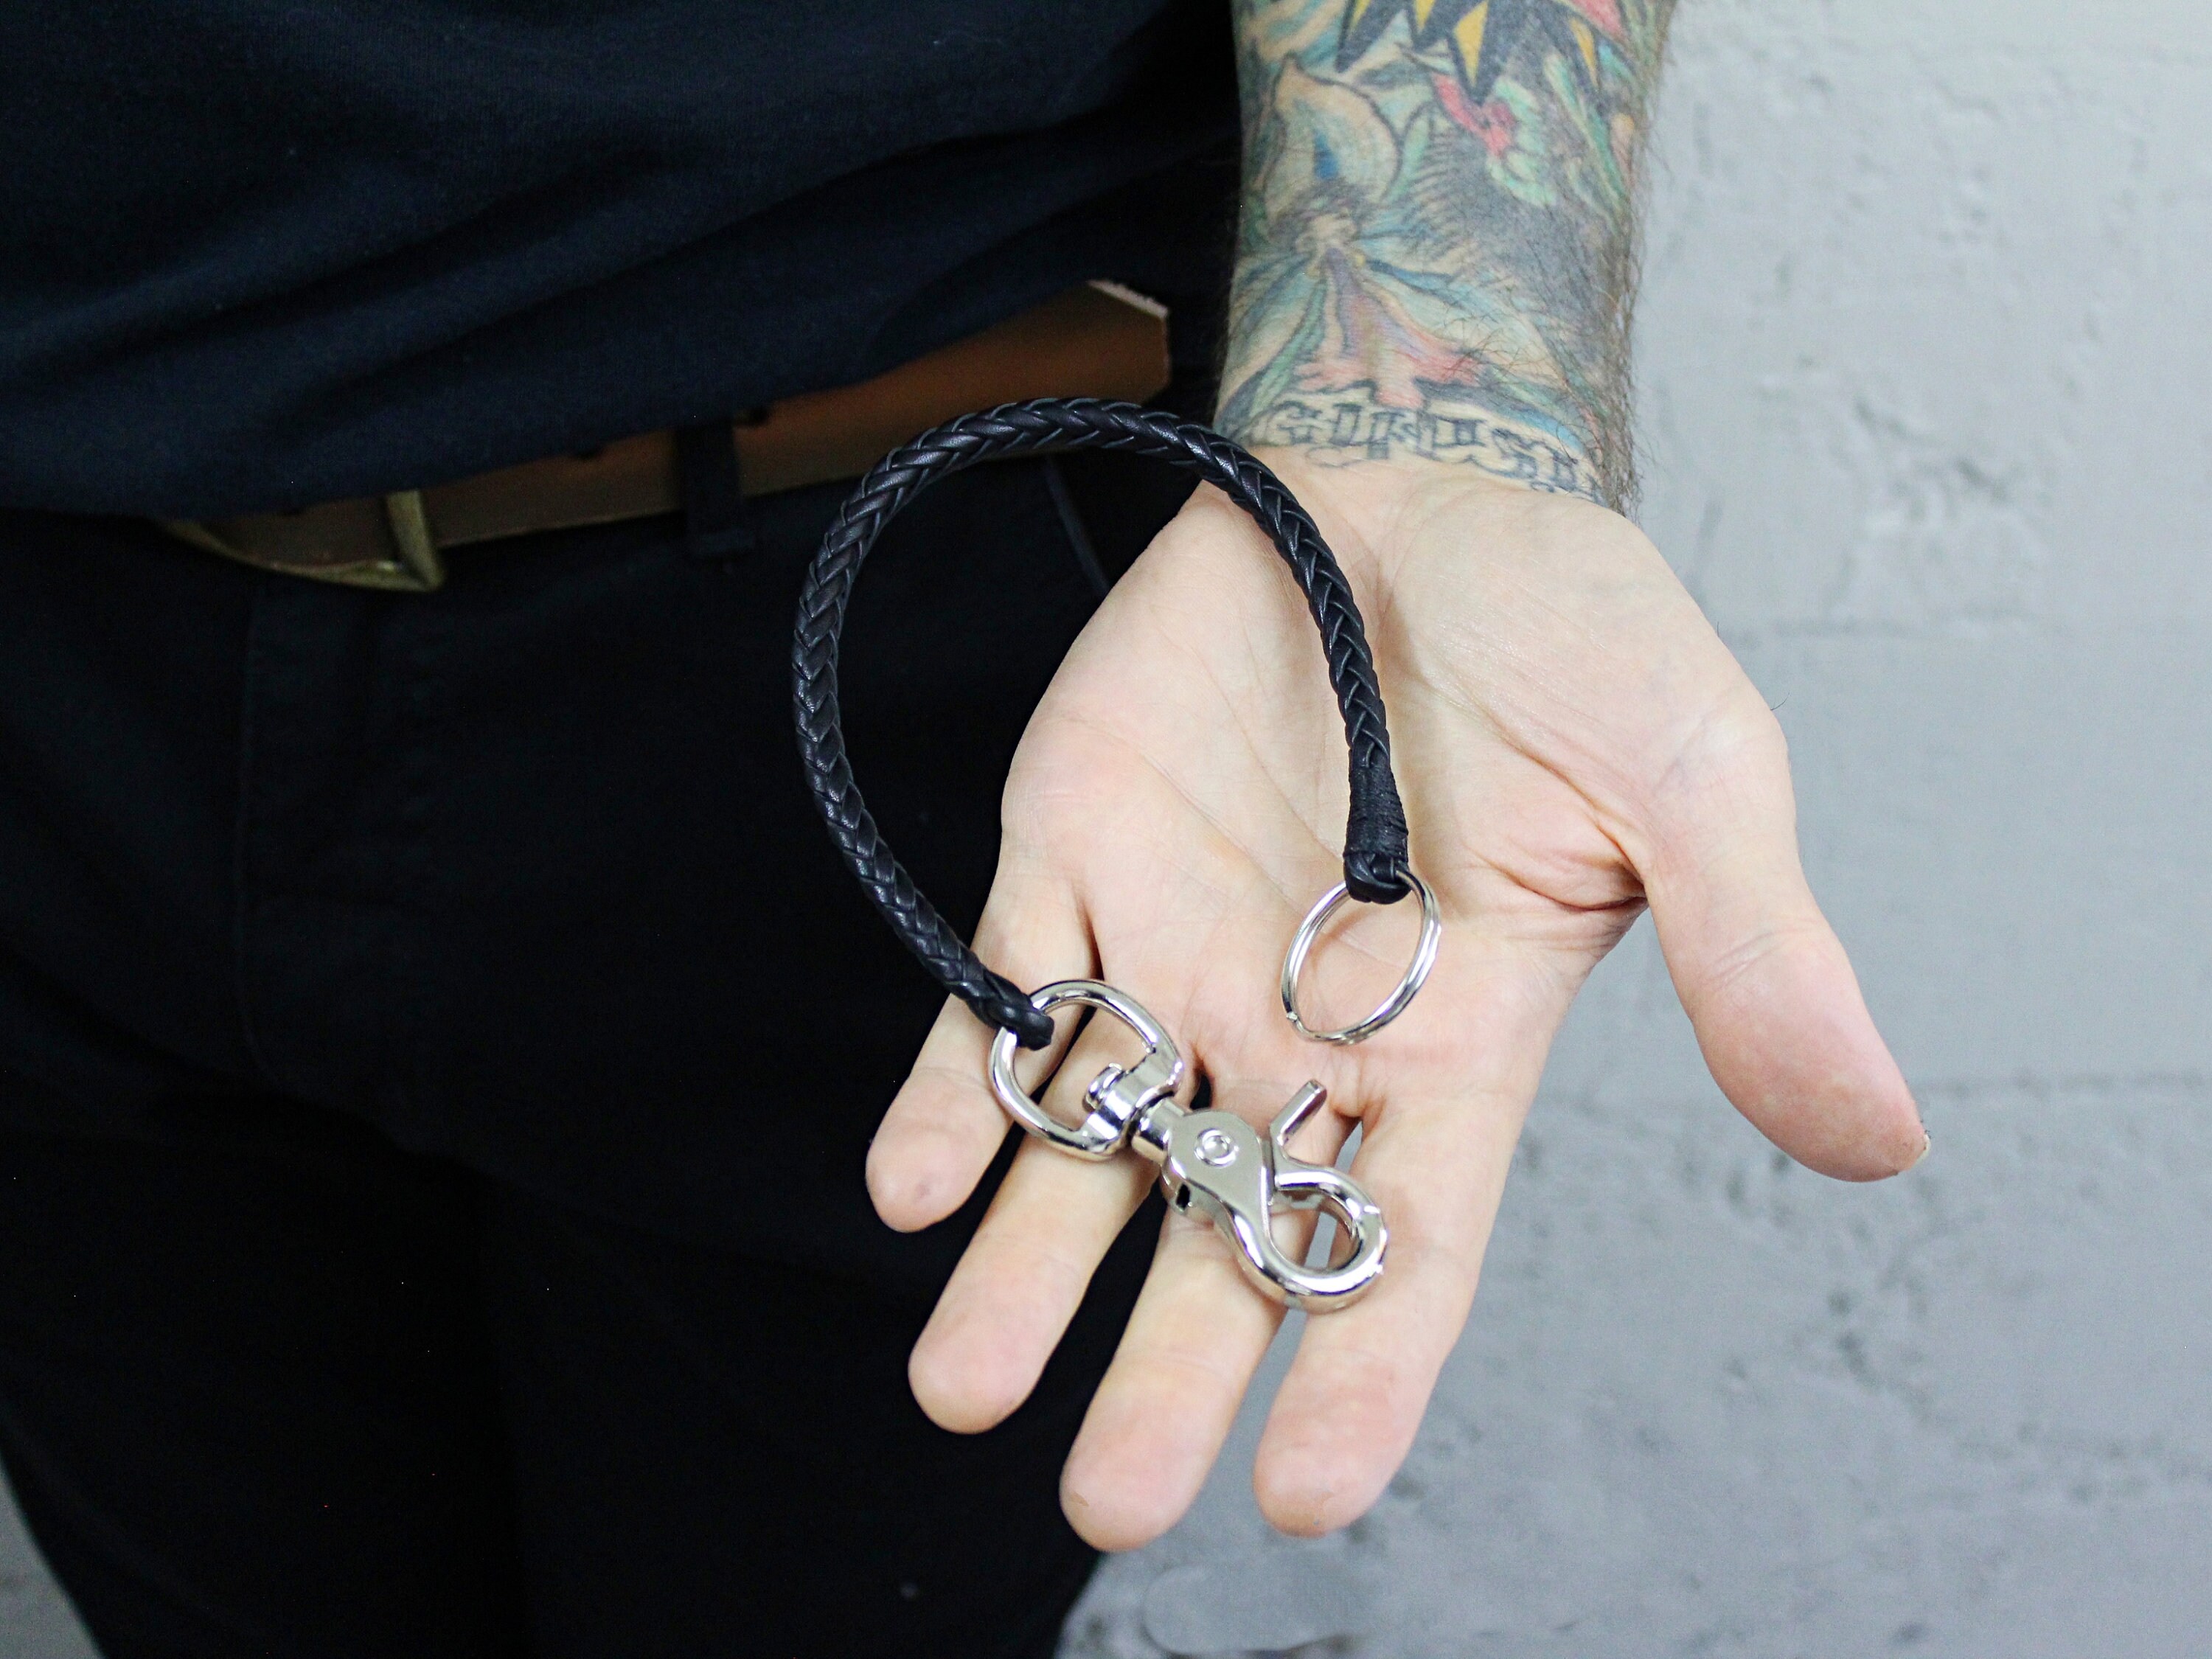 Keep It Gypsy Distressed Leather Key Ring Loop or Wristlet Strap